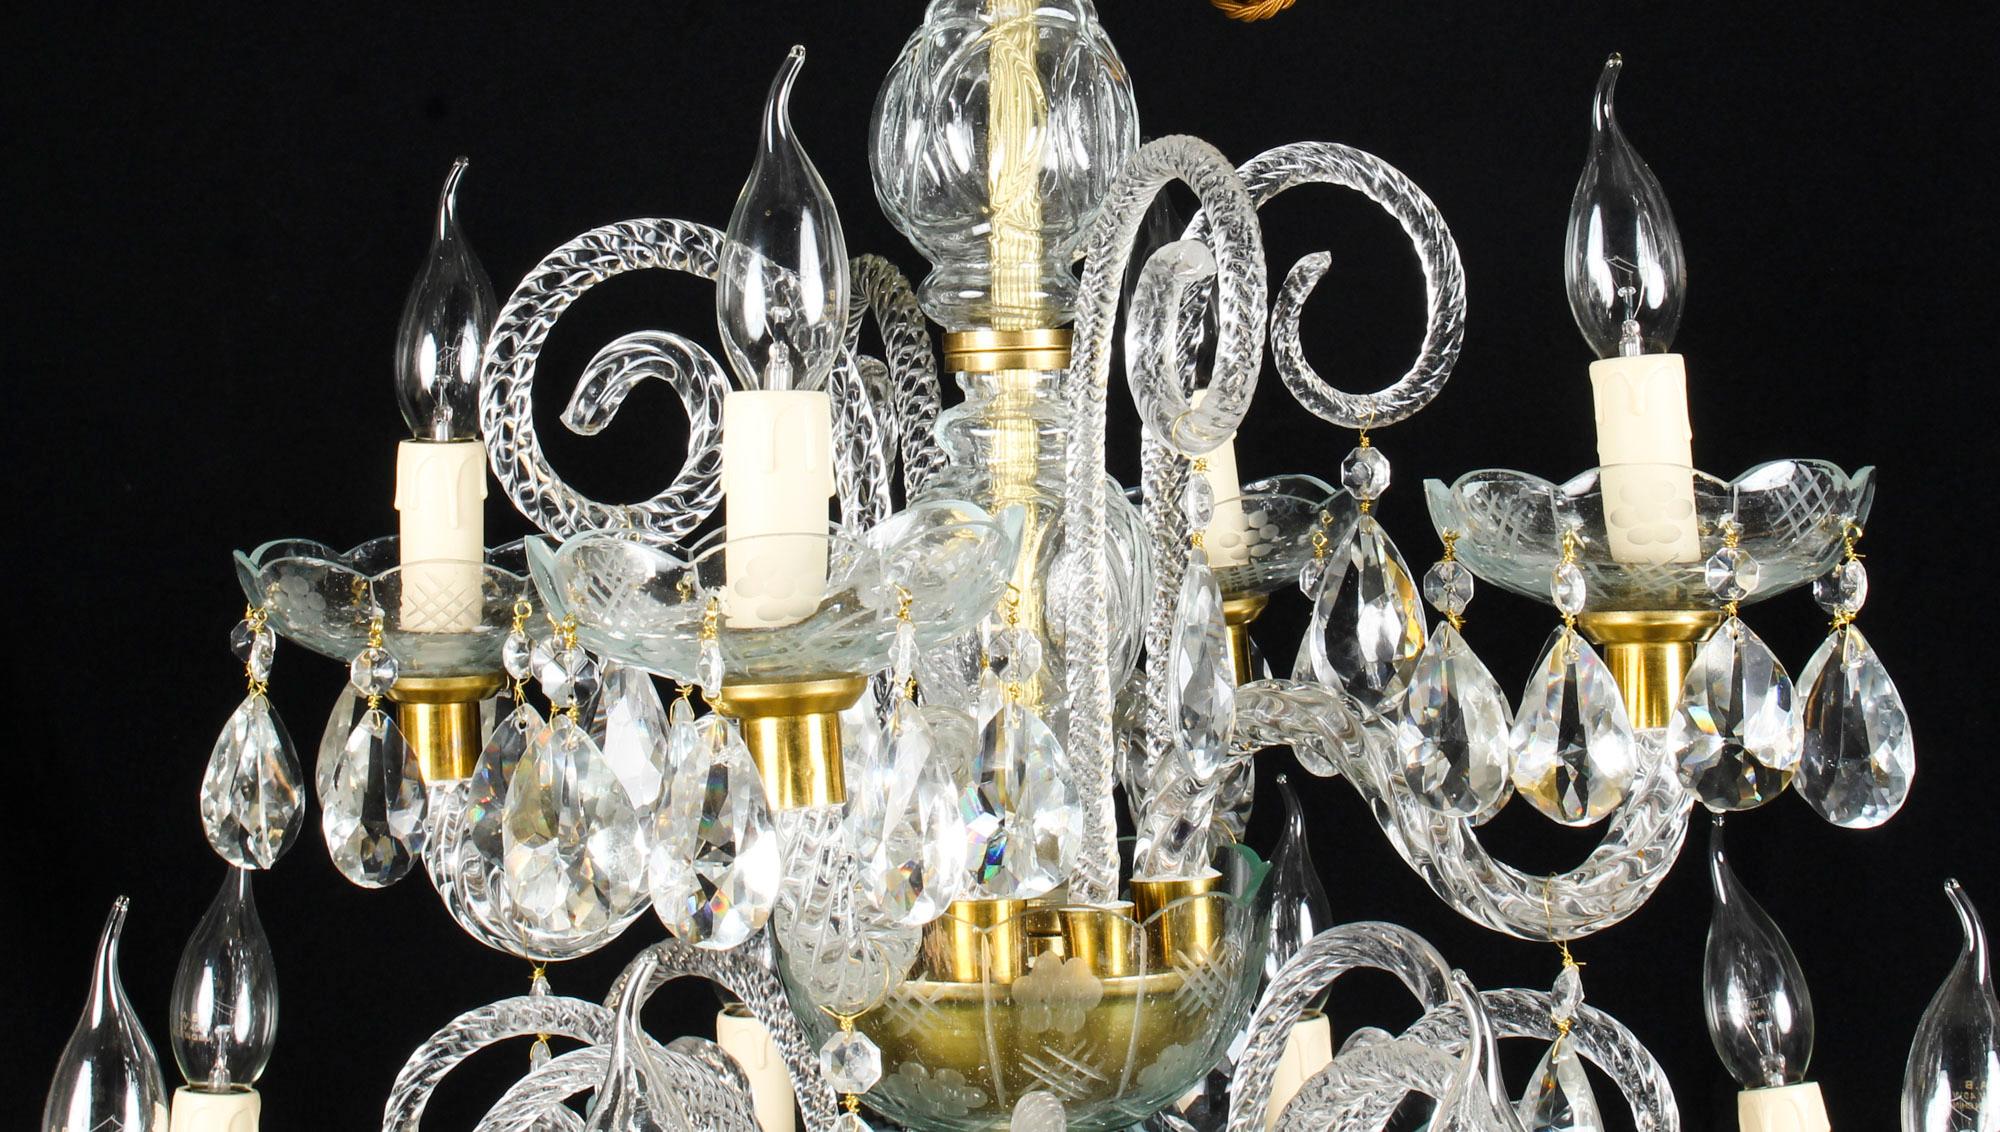 Pair of Vintage Venetian 12 Light Crystal Chandeliers 20th Century For Sale 1